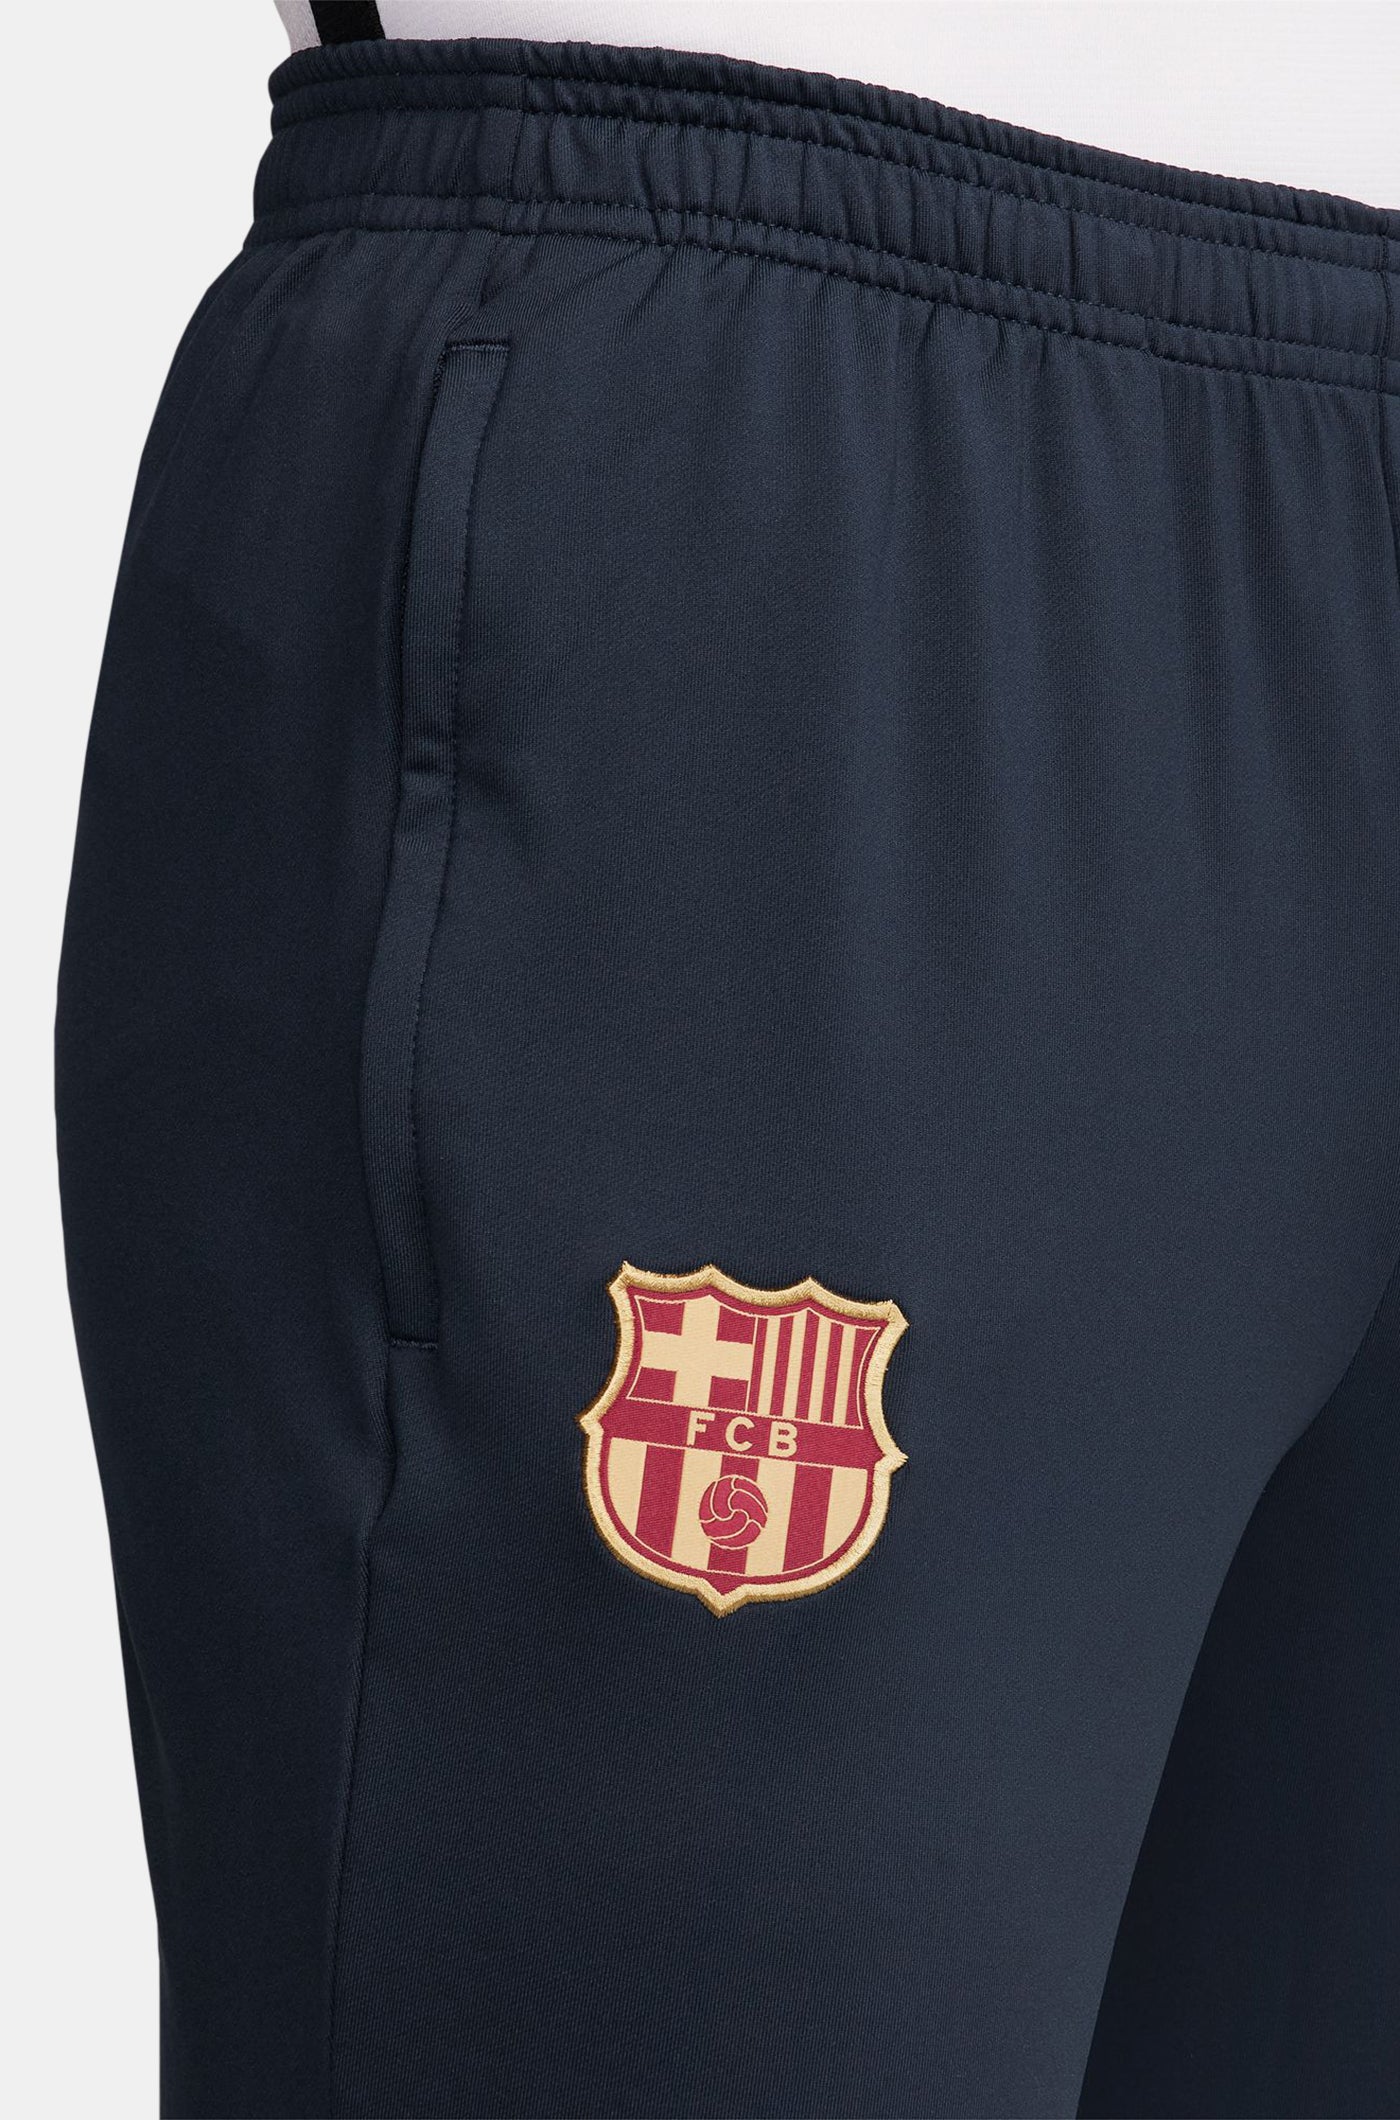 FC Barcelona obsidian training pants 23/24